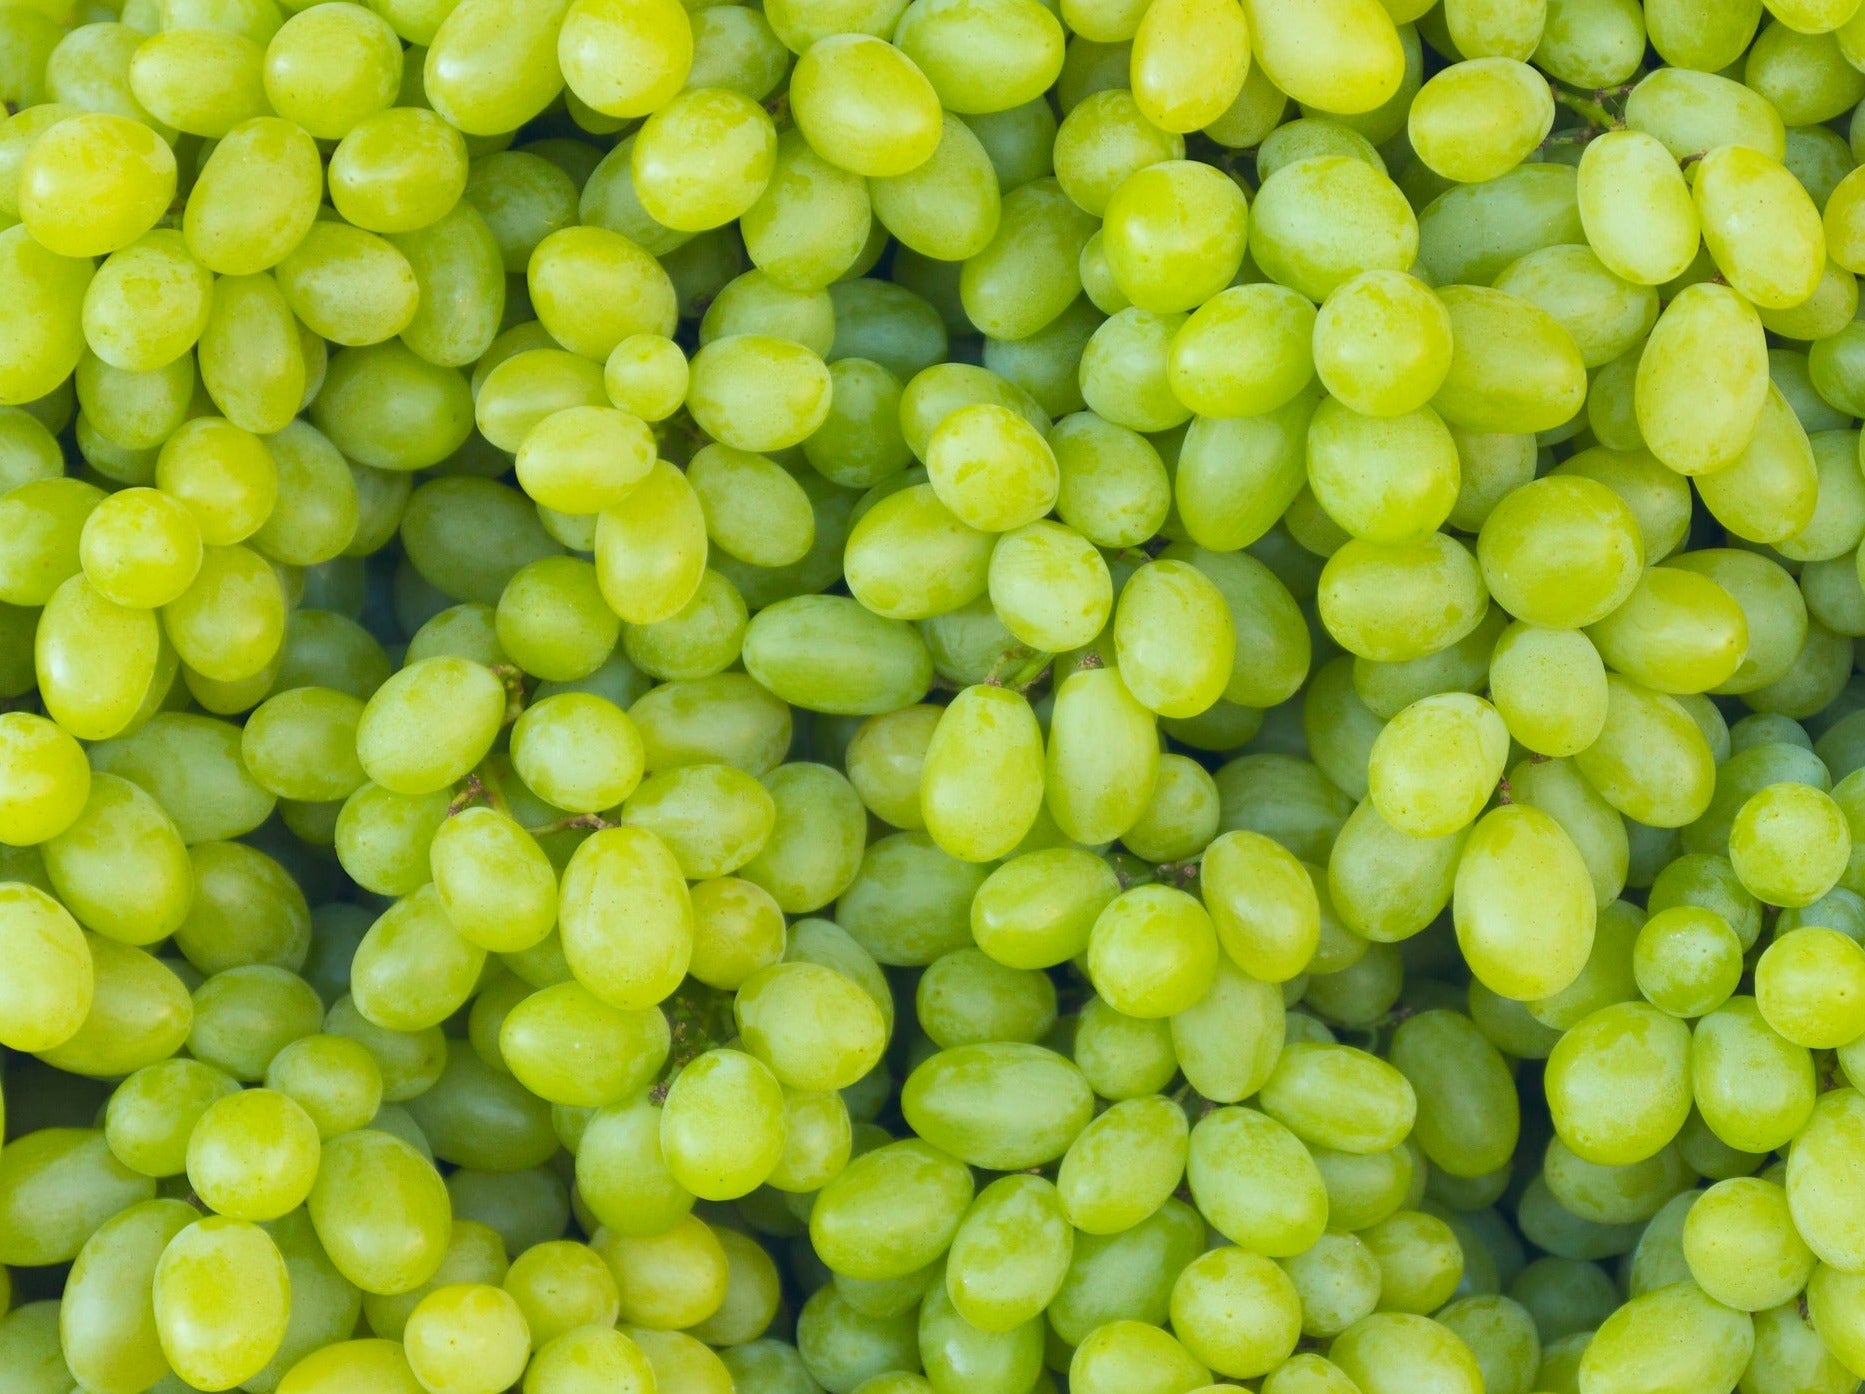 USA Organic Seedless Grapes - Green (Fumigated)